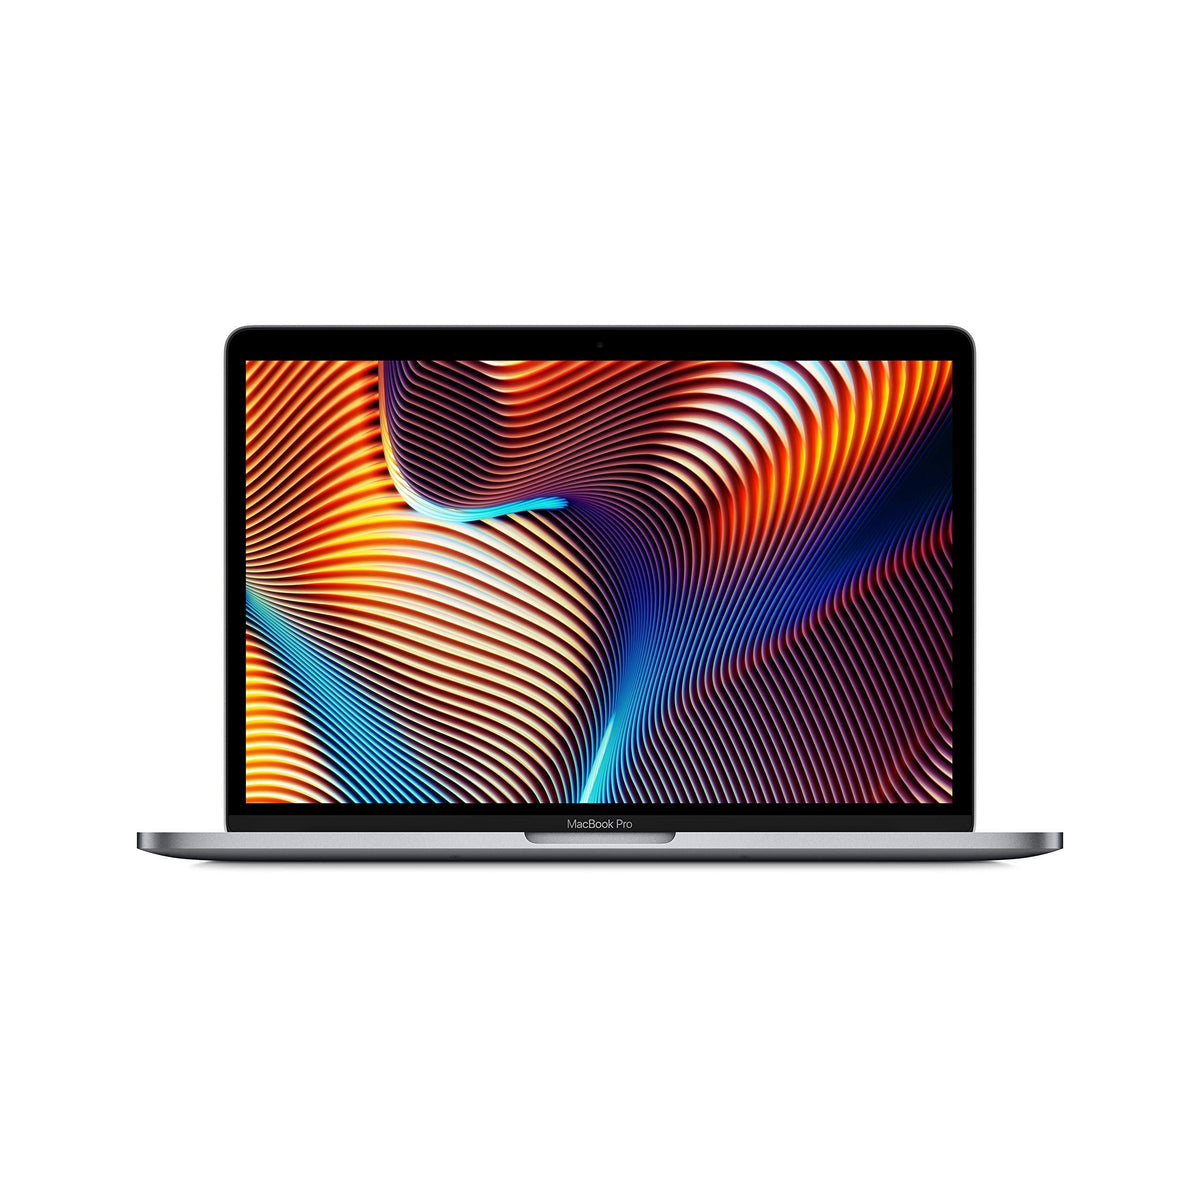 Apple MacBook Pro 13" (2019) 1.4GHz quad-core Intel Core i5 - Good Condition